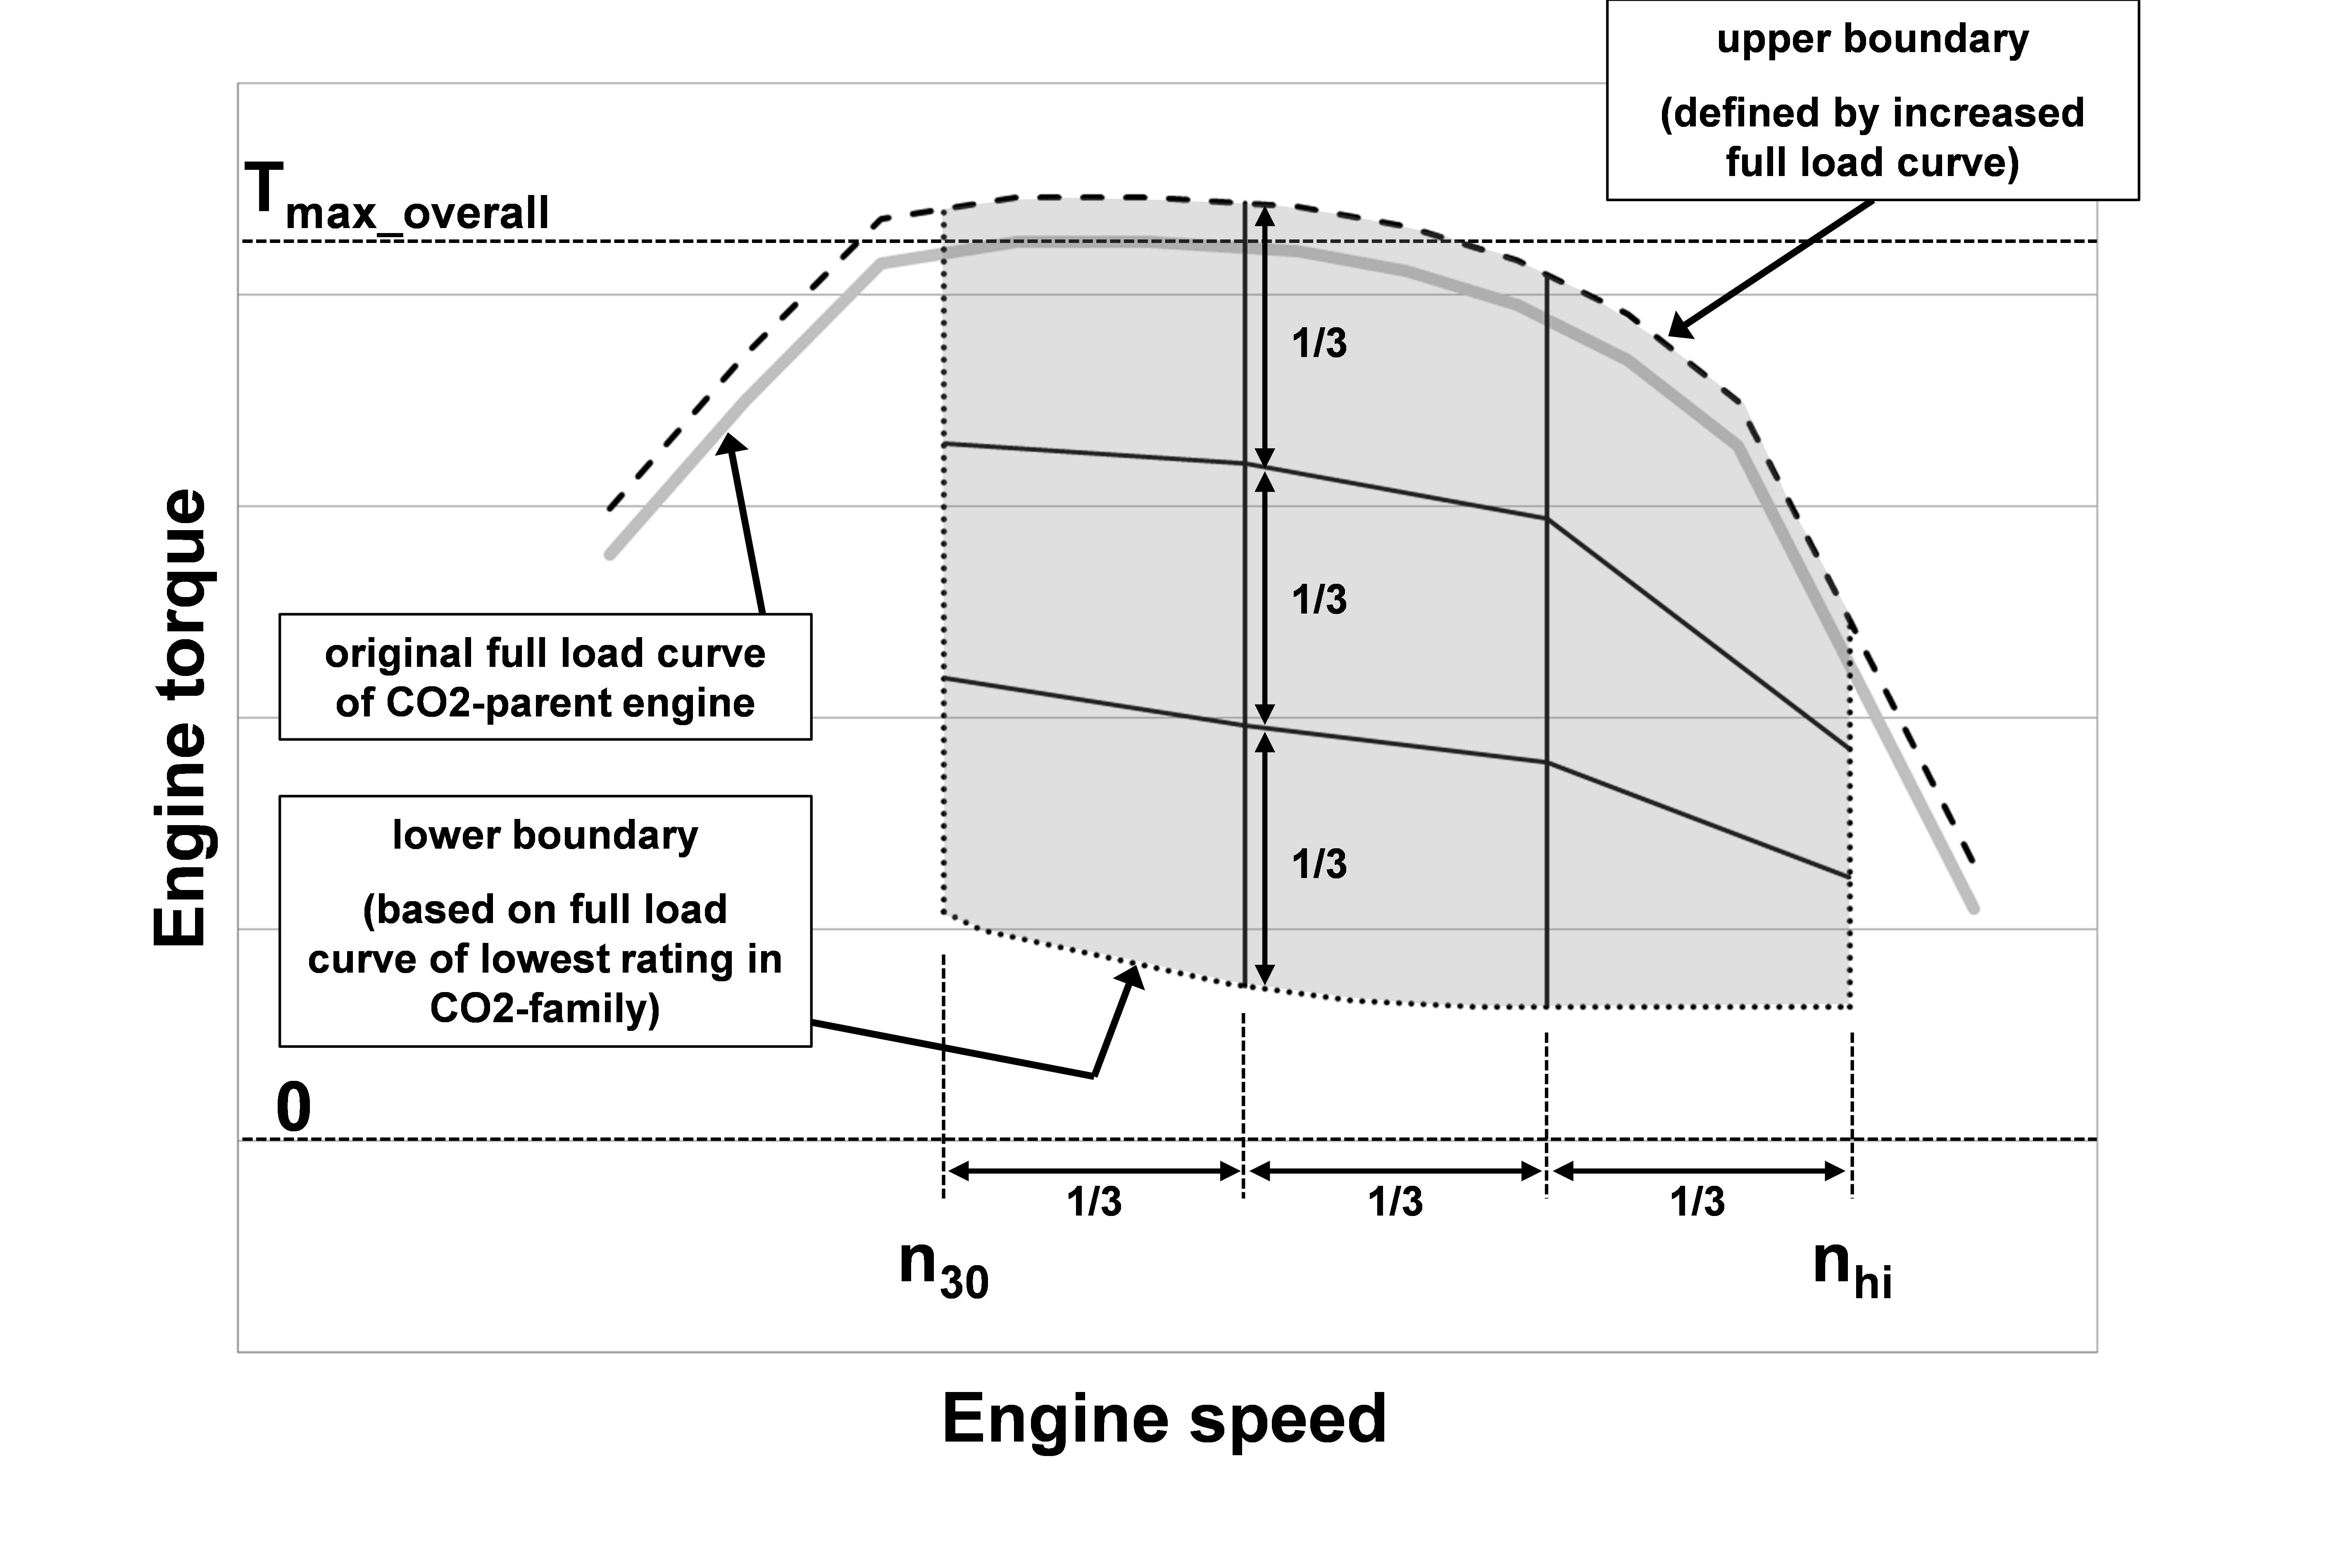 Pv Diagram for 4 Stroke Petrol Engine Eur Lex C 2017 7937 En Eur Lex Of Pv Diagram for 4 Stroke Petrol Engine